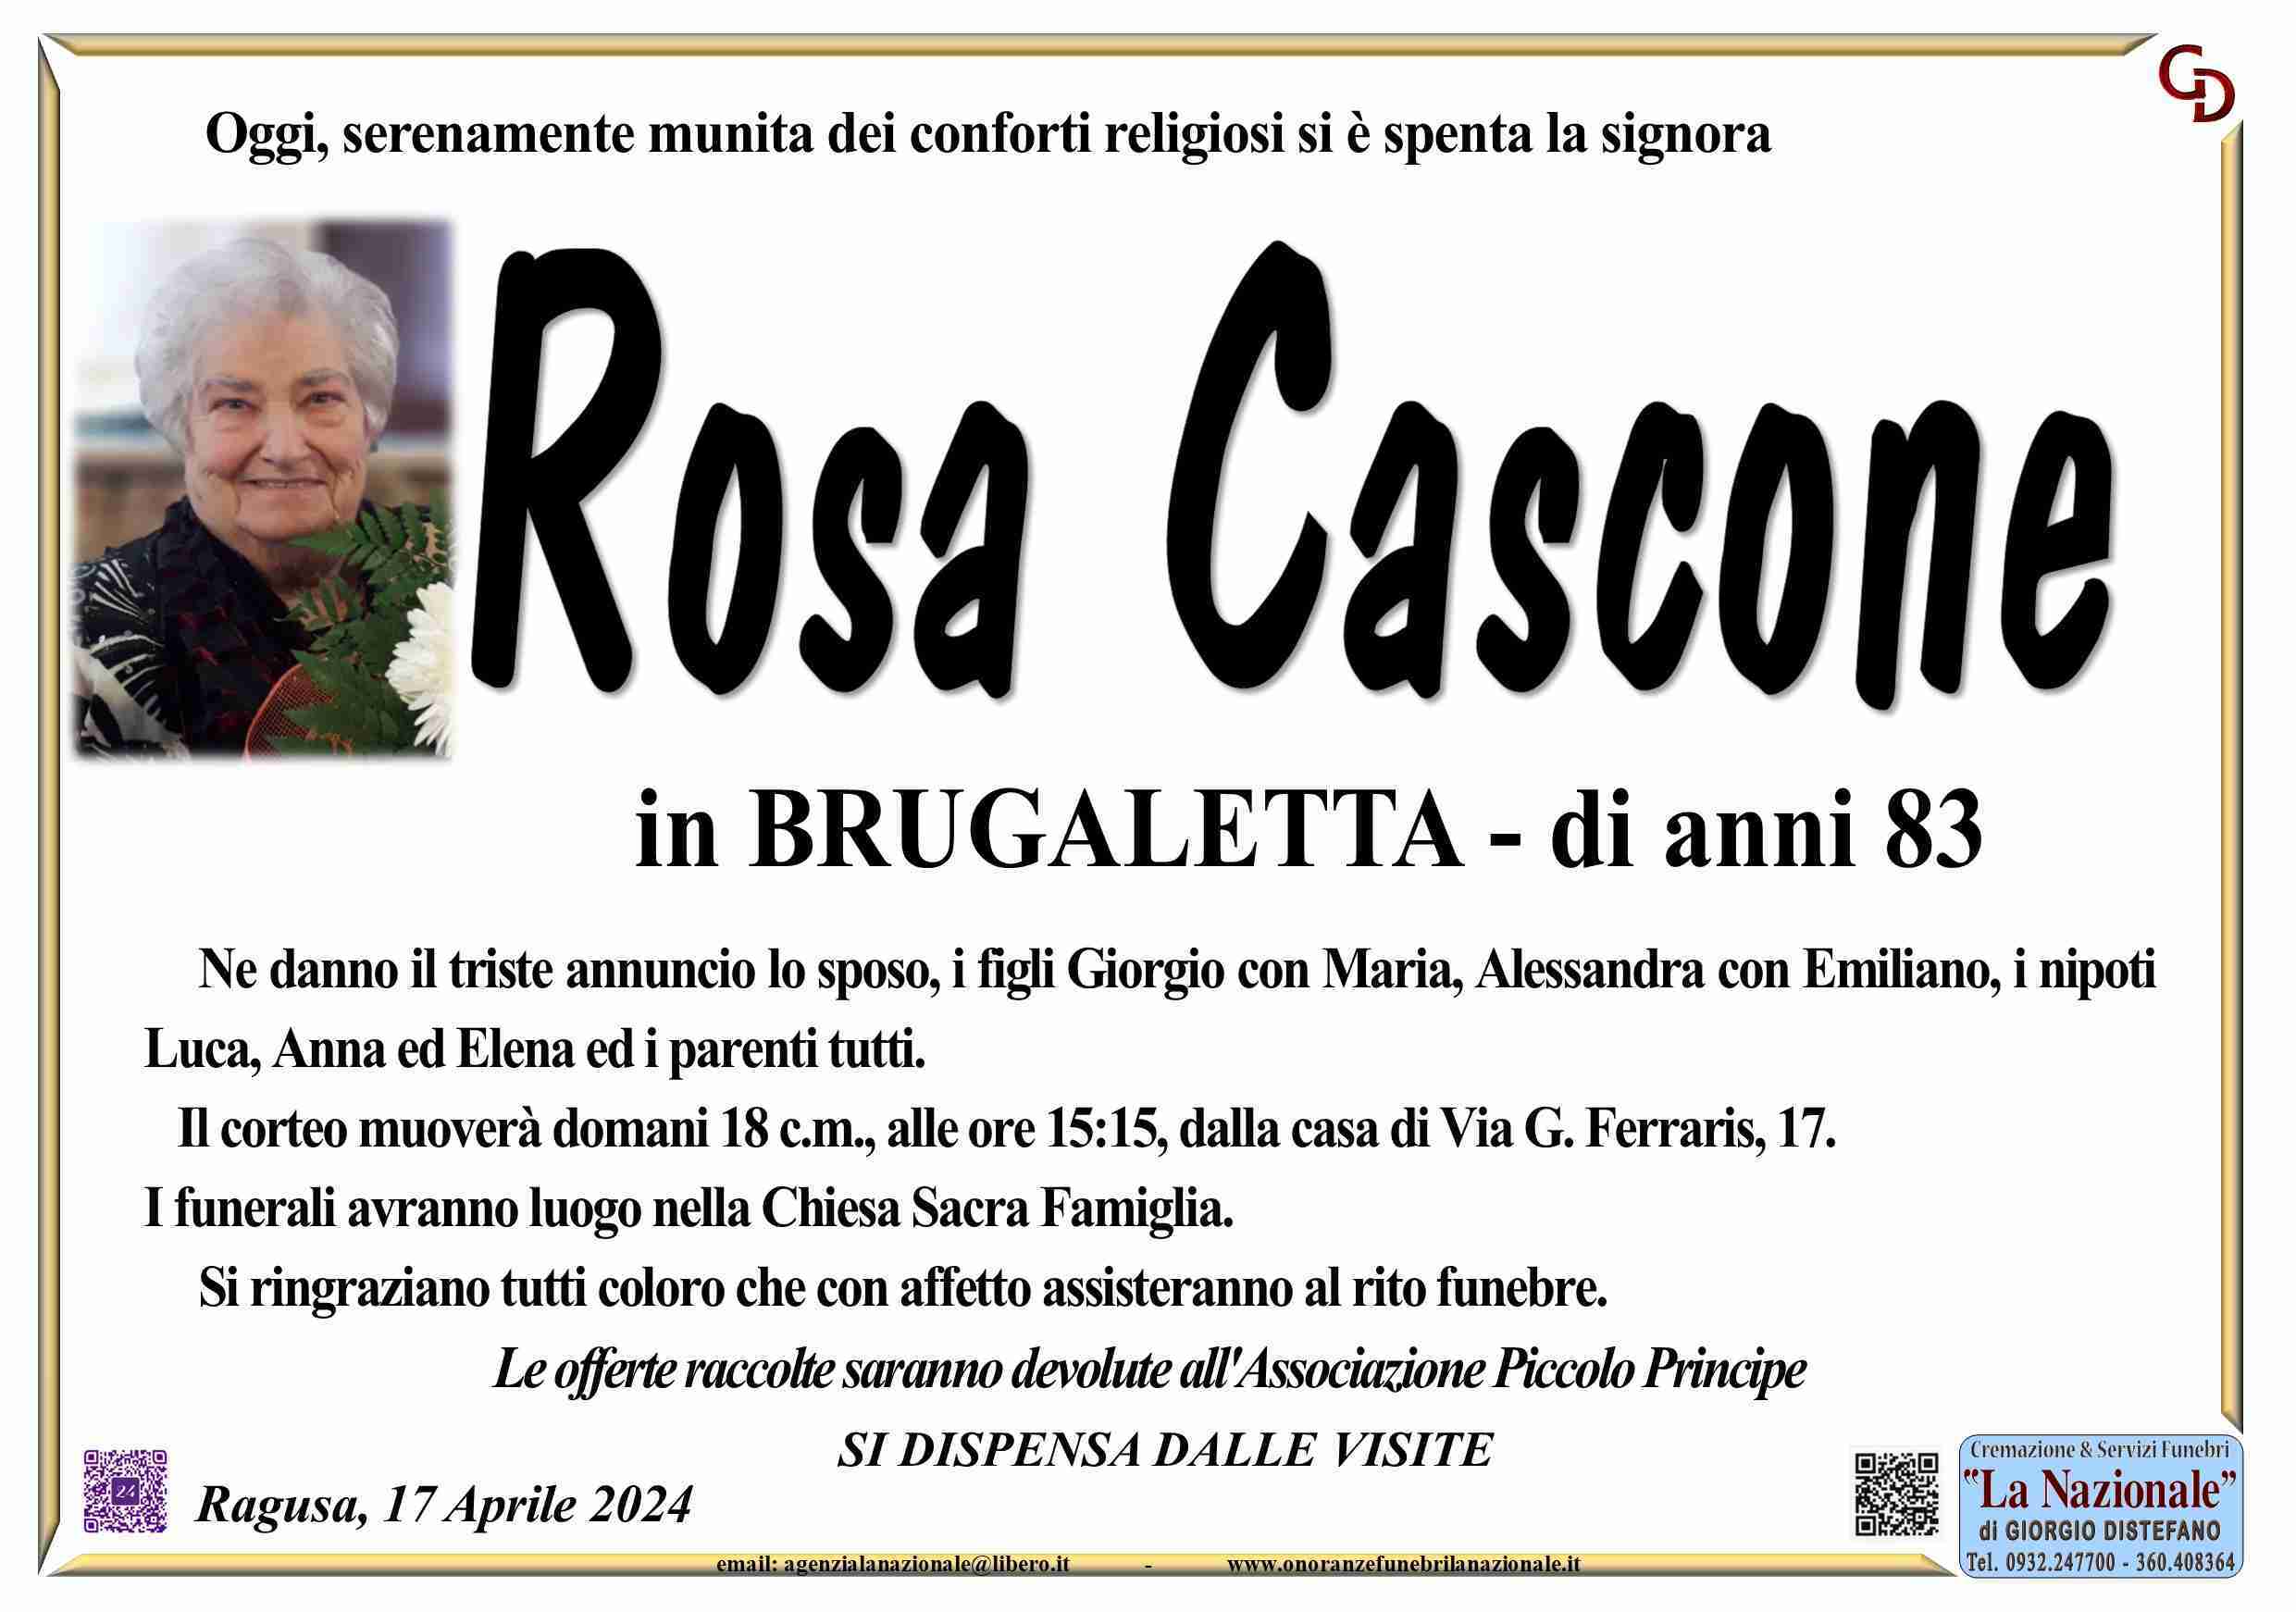 Rosa Cascone